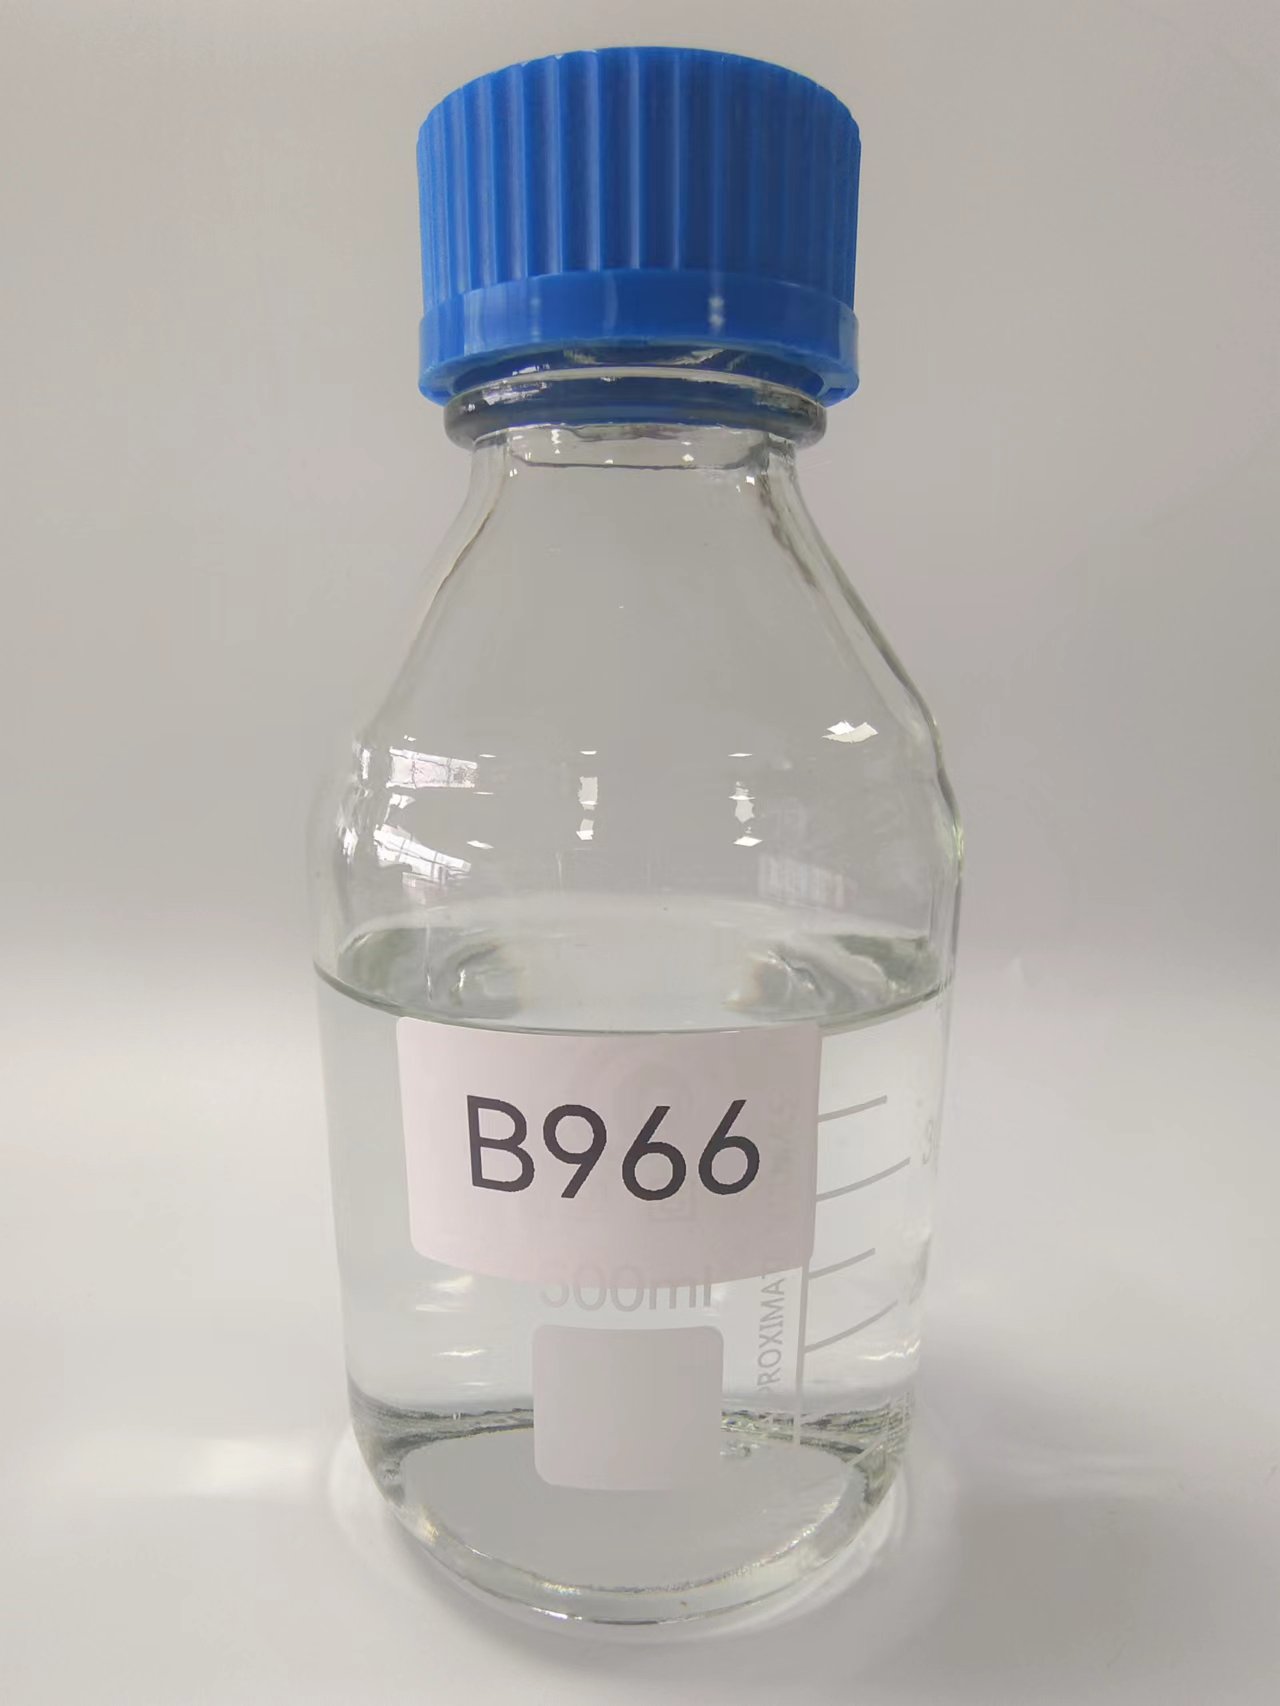 B966 Moisture-proof and anti-corrosion treatment agent